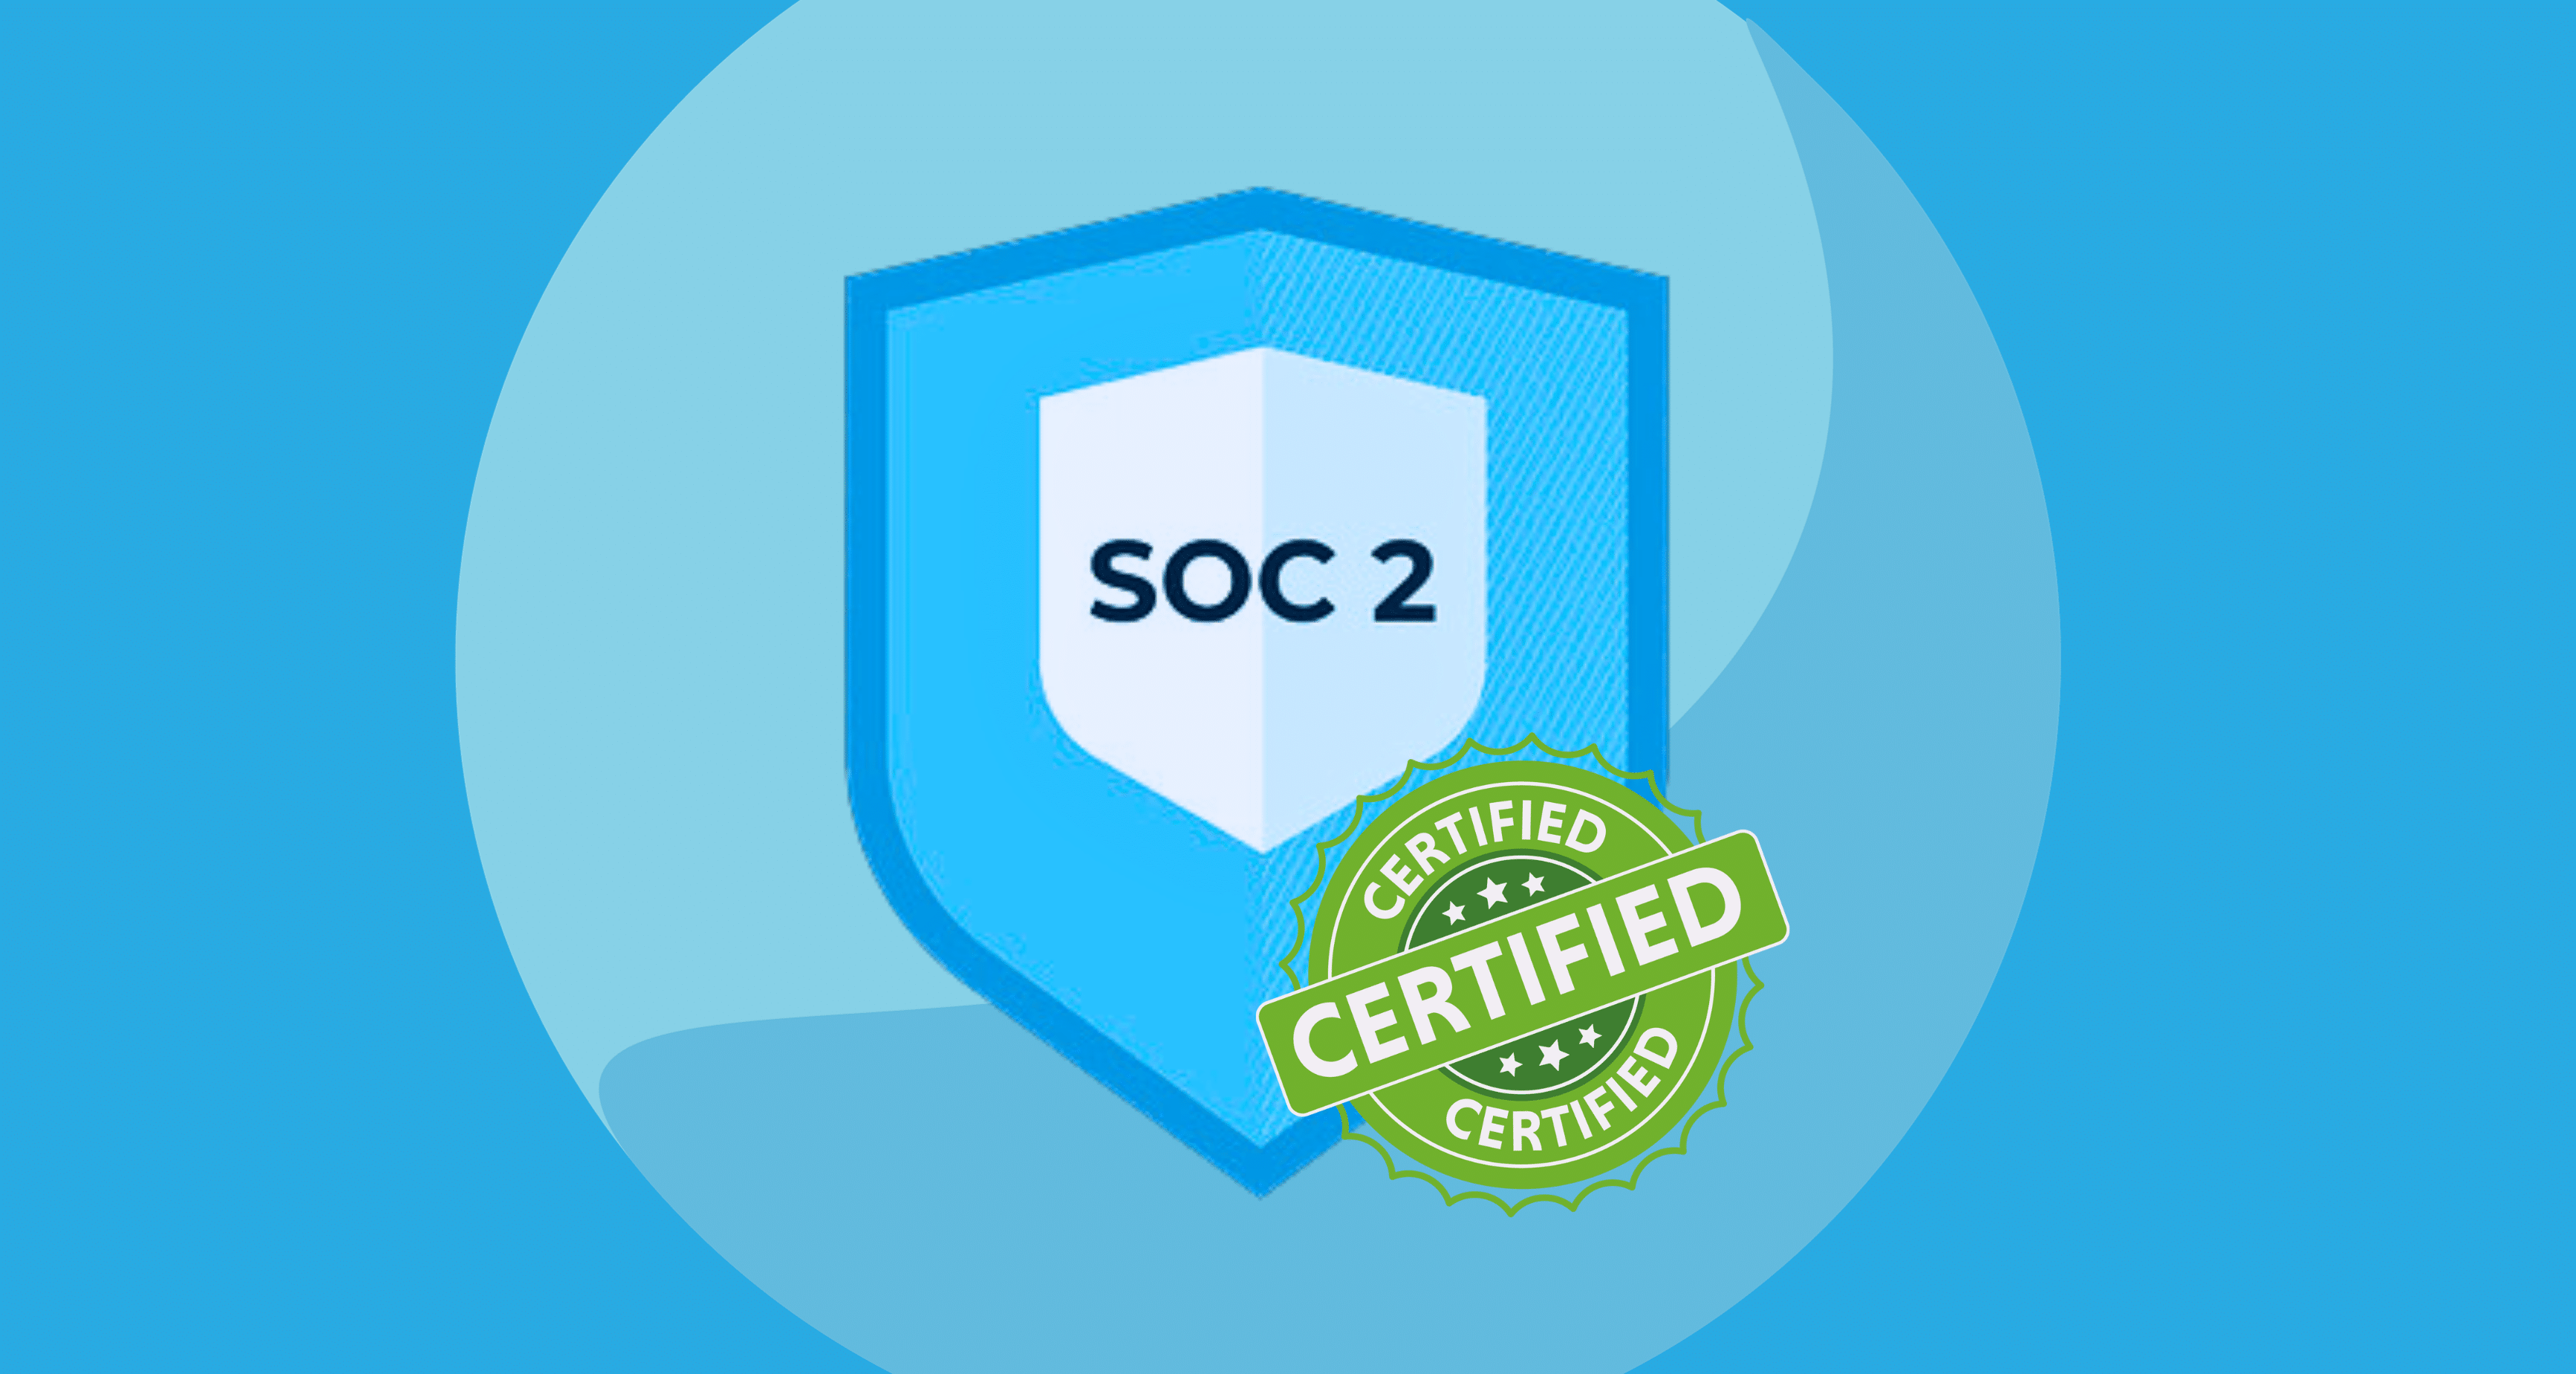 soc 2 certification